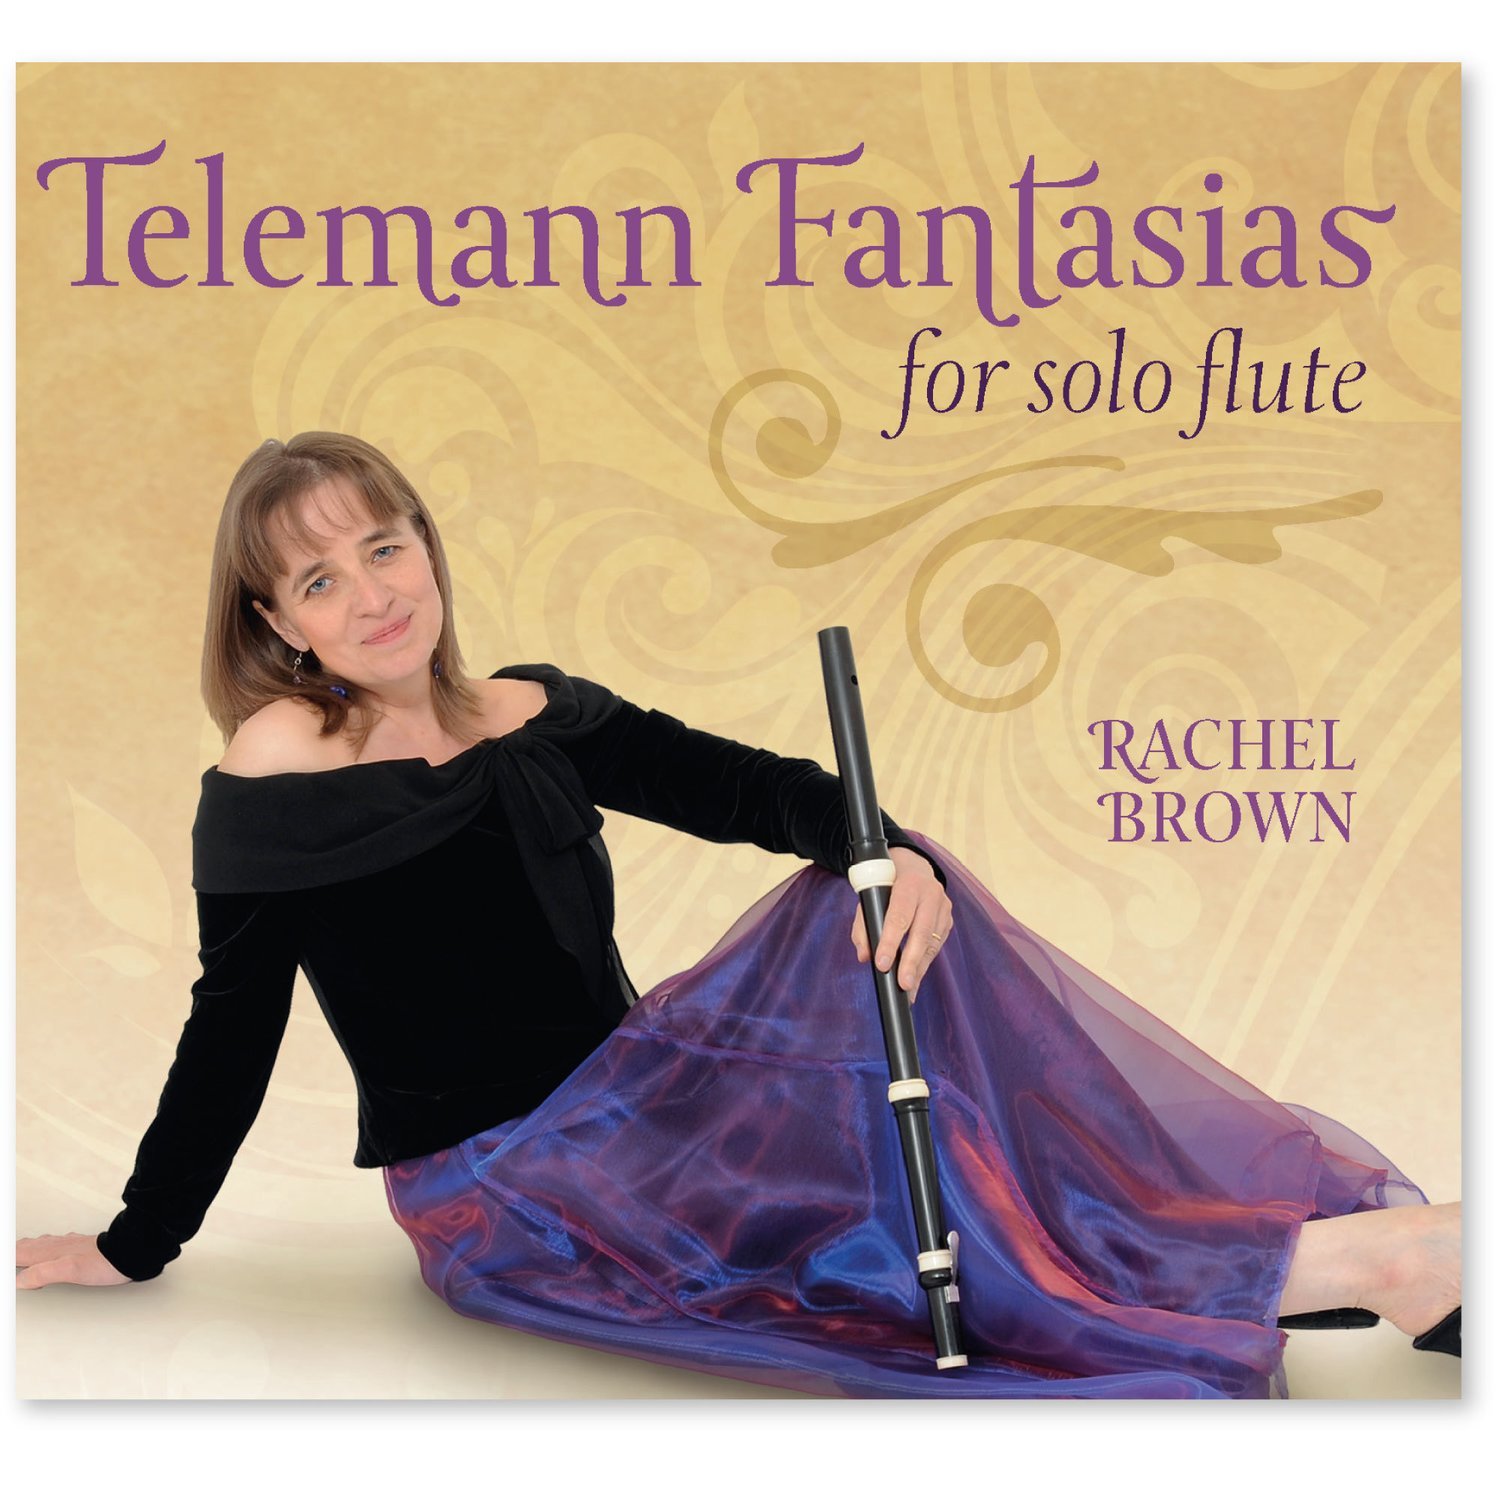 Telemann Fantasias for solo flute